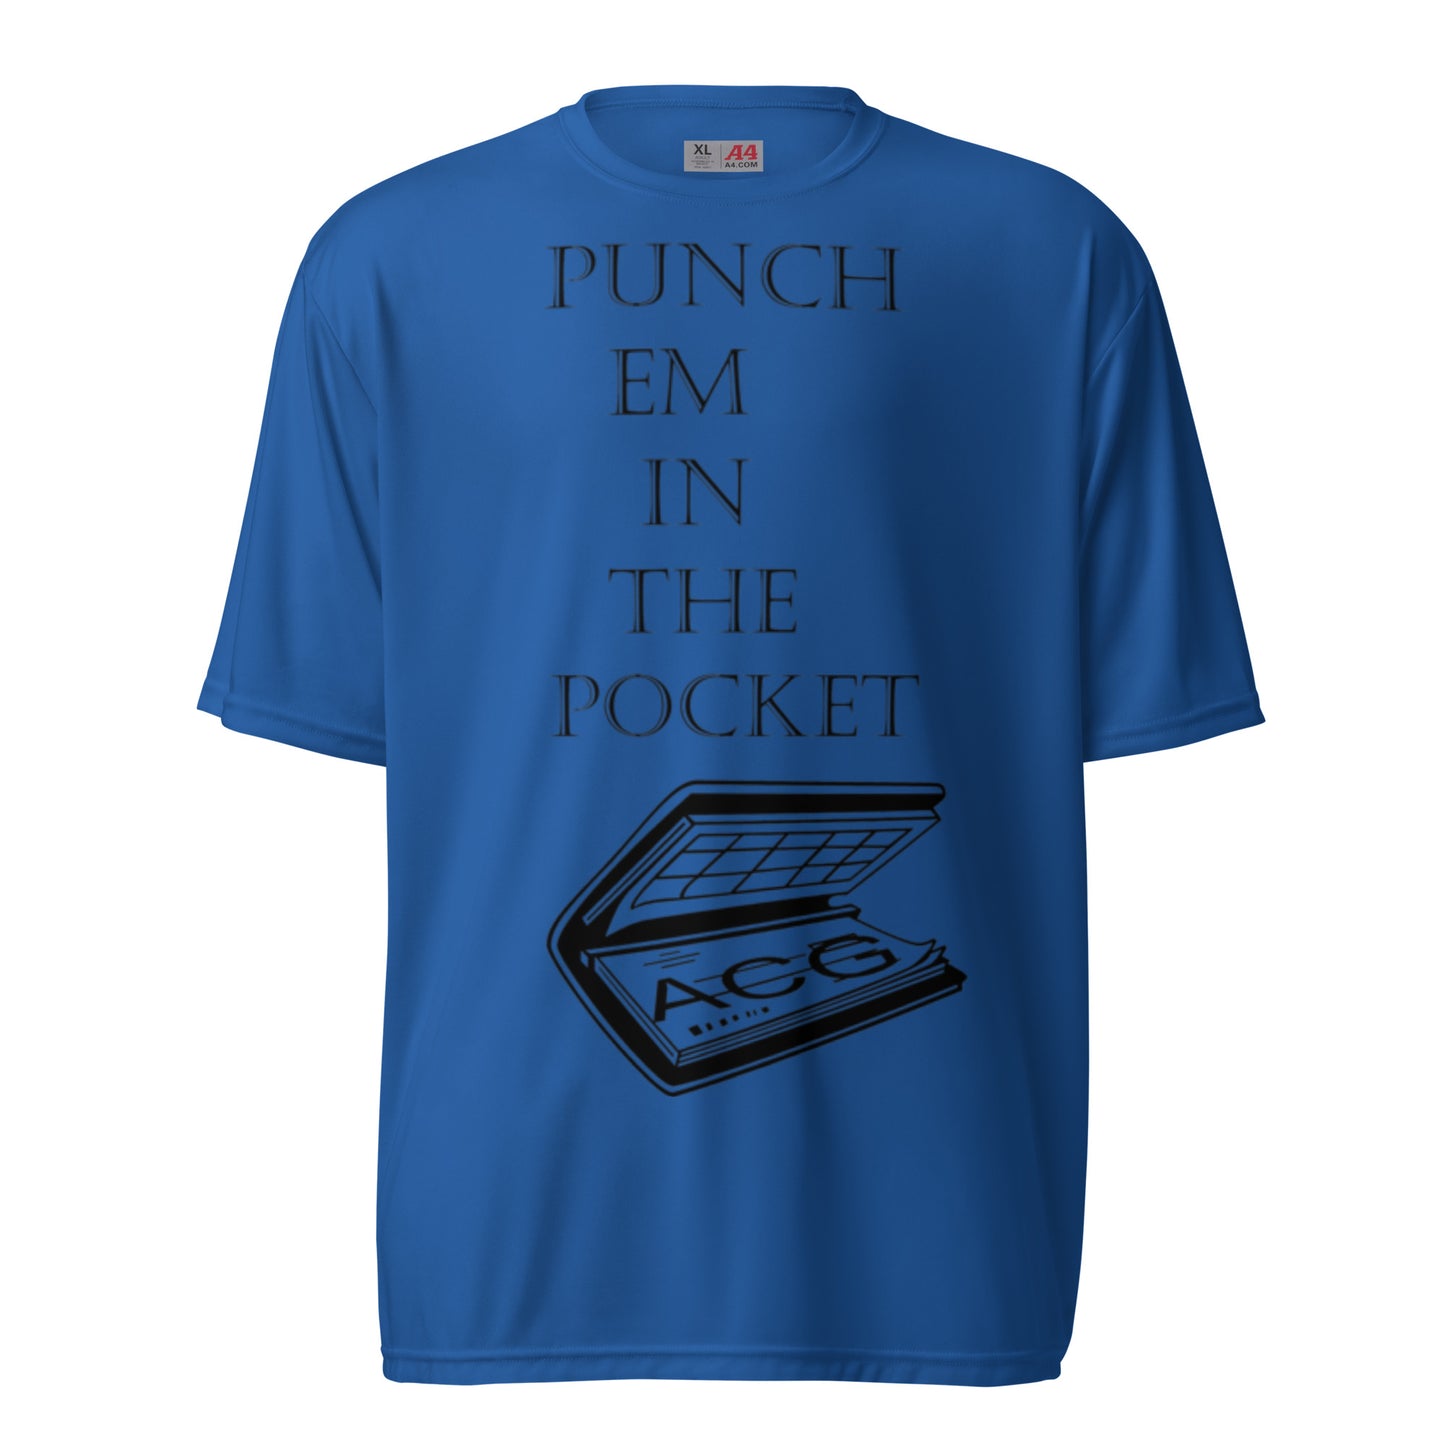 ACG punch em in the pocket Unisex performance crew neck t-shirt